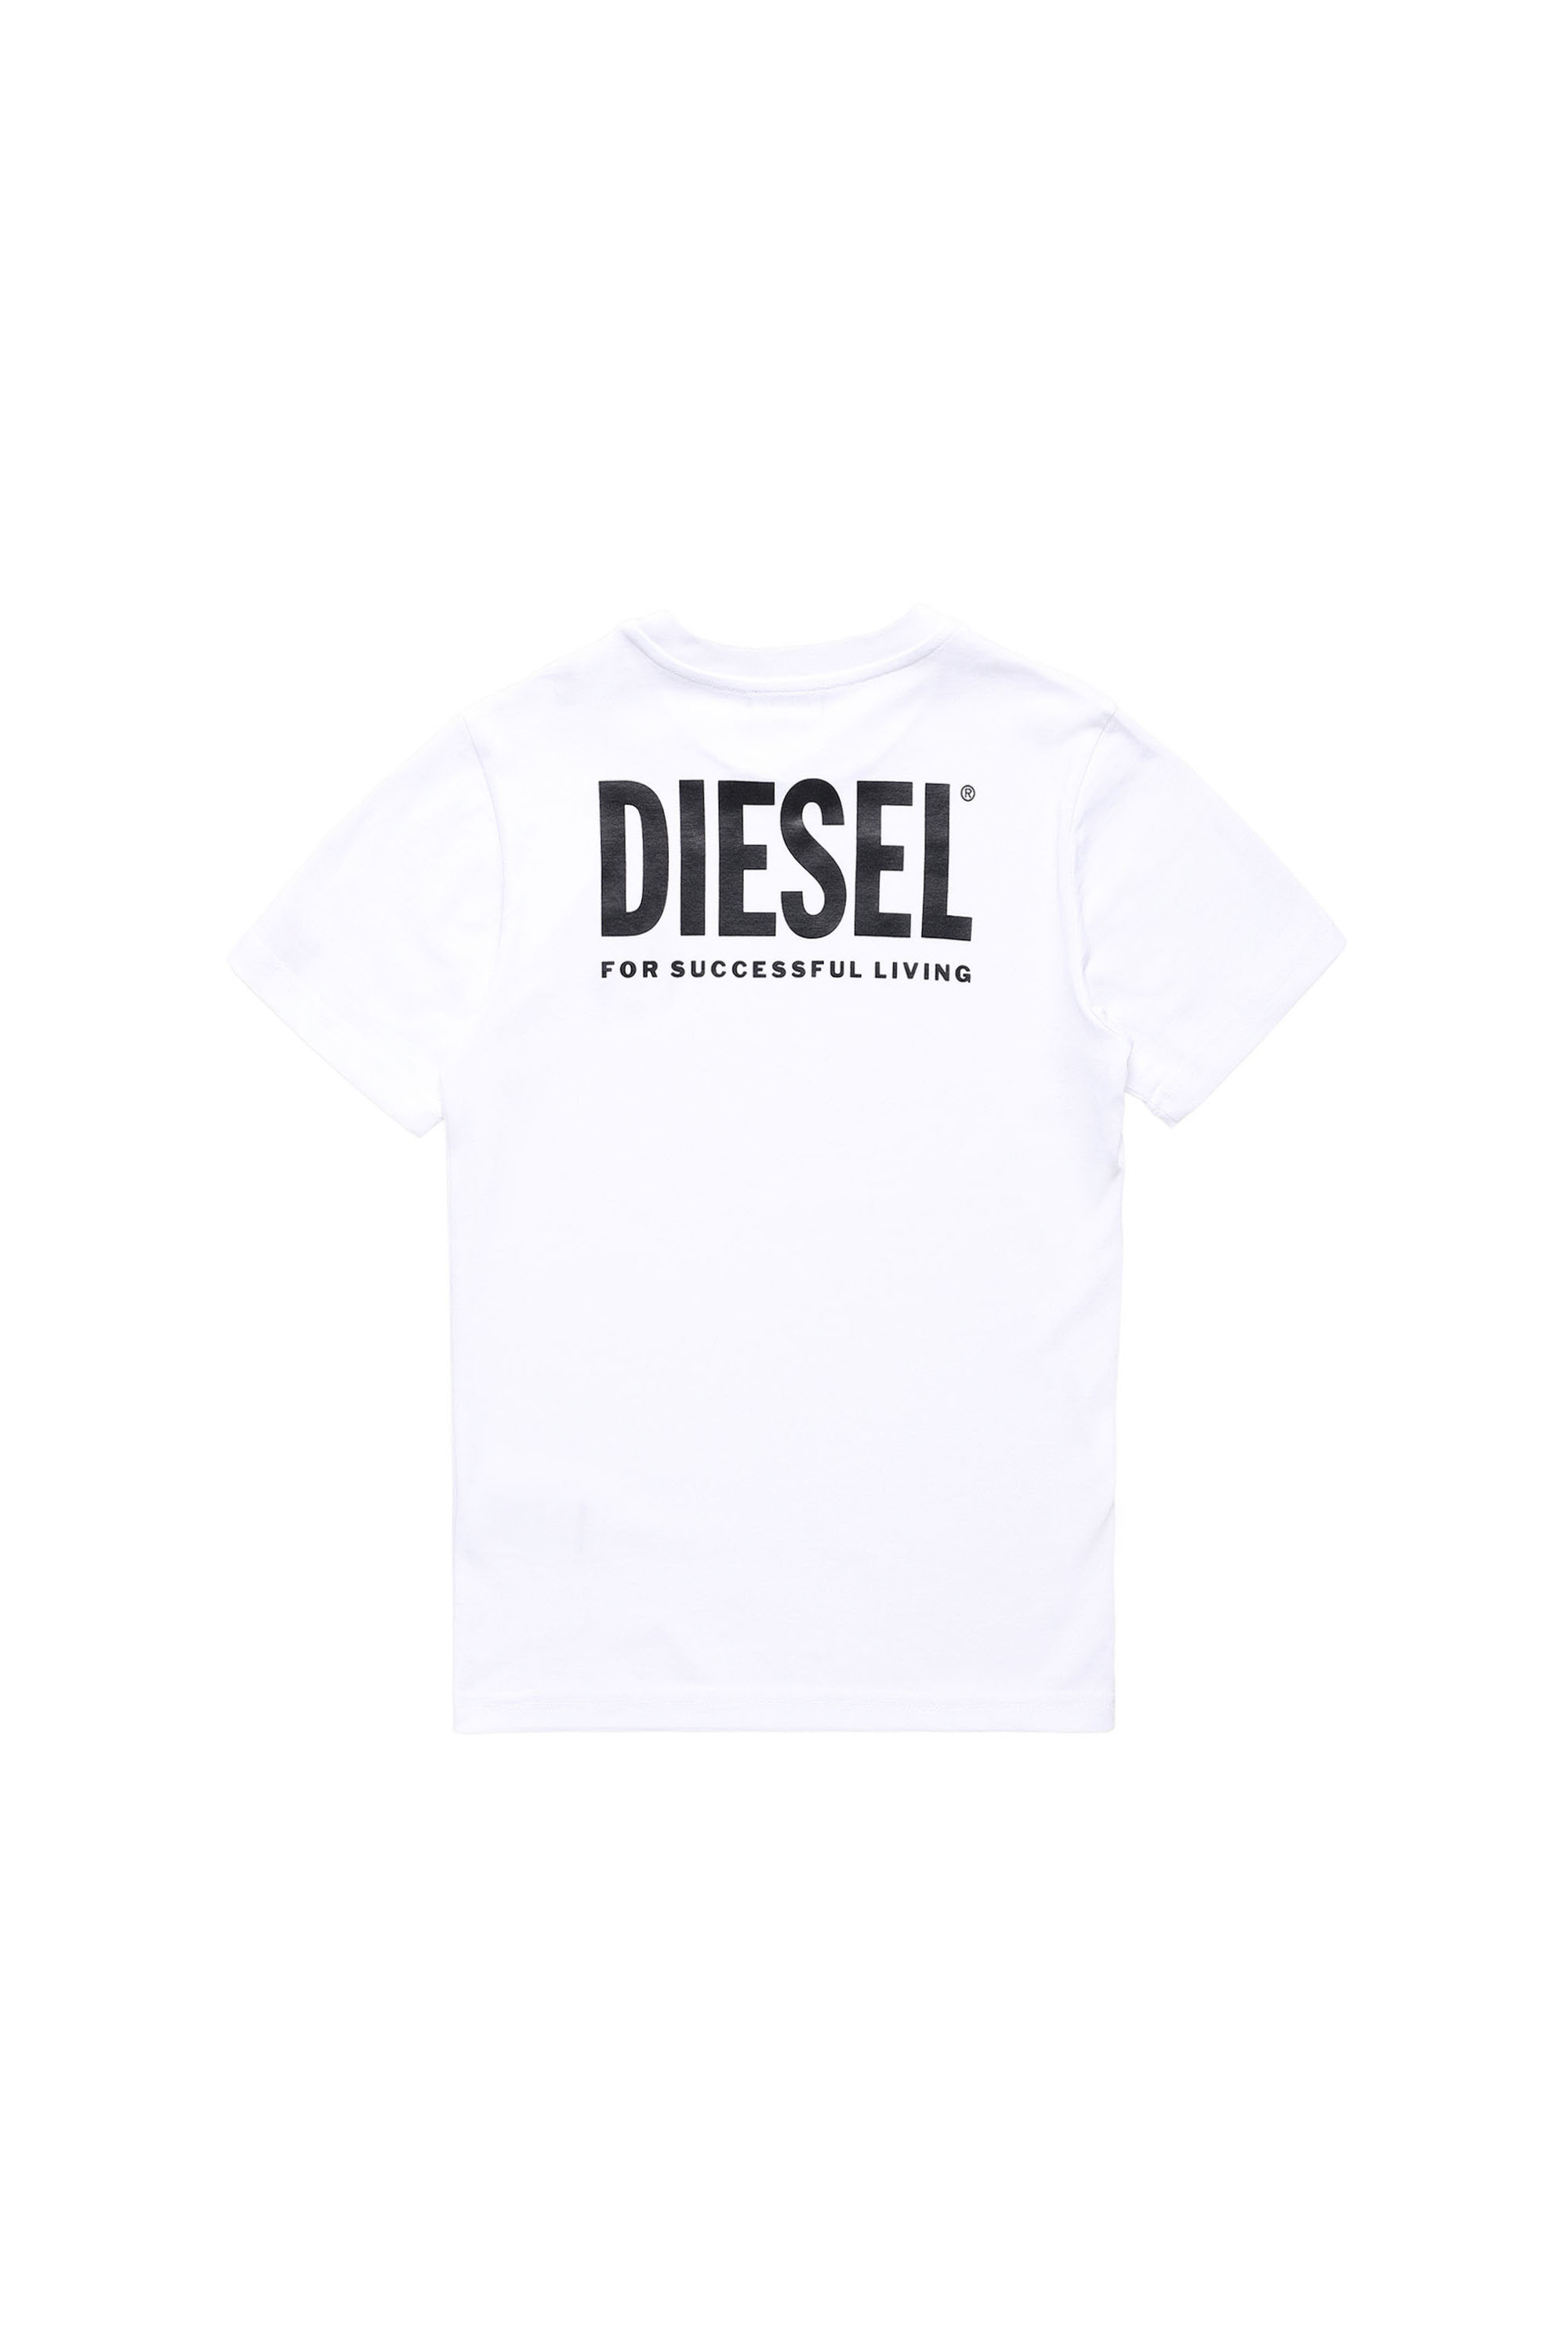 Diesel - LR TDIEGO VIC, White - Image 2